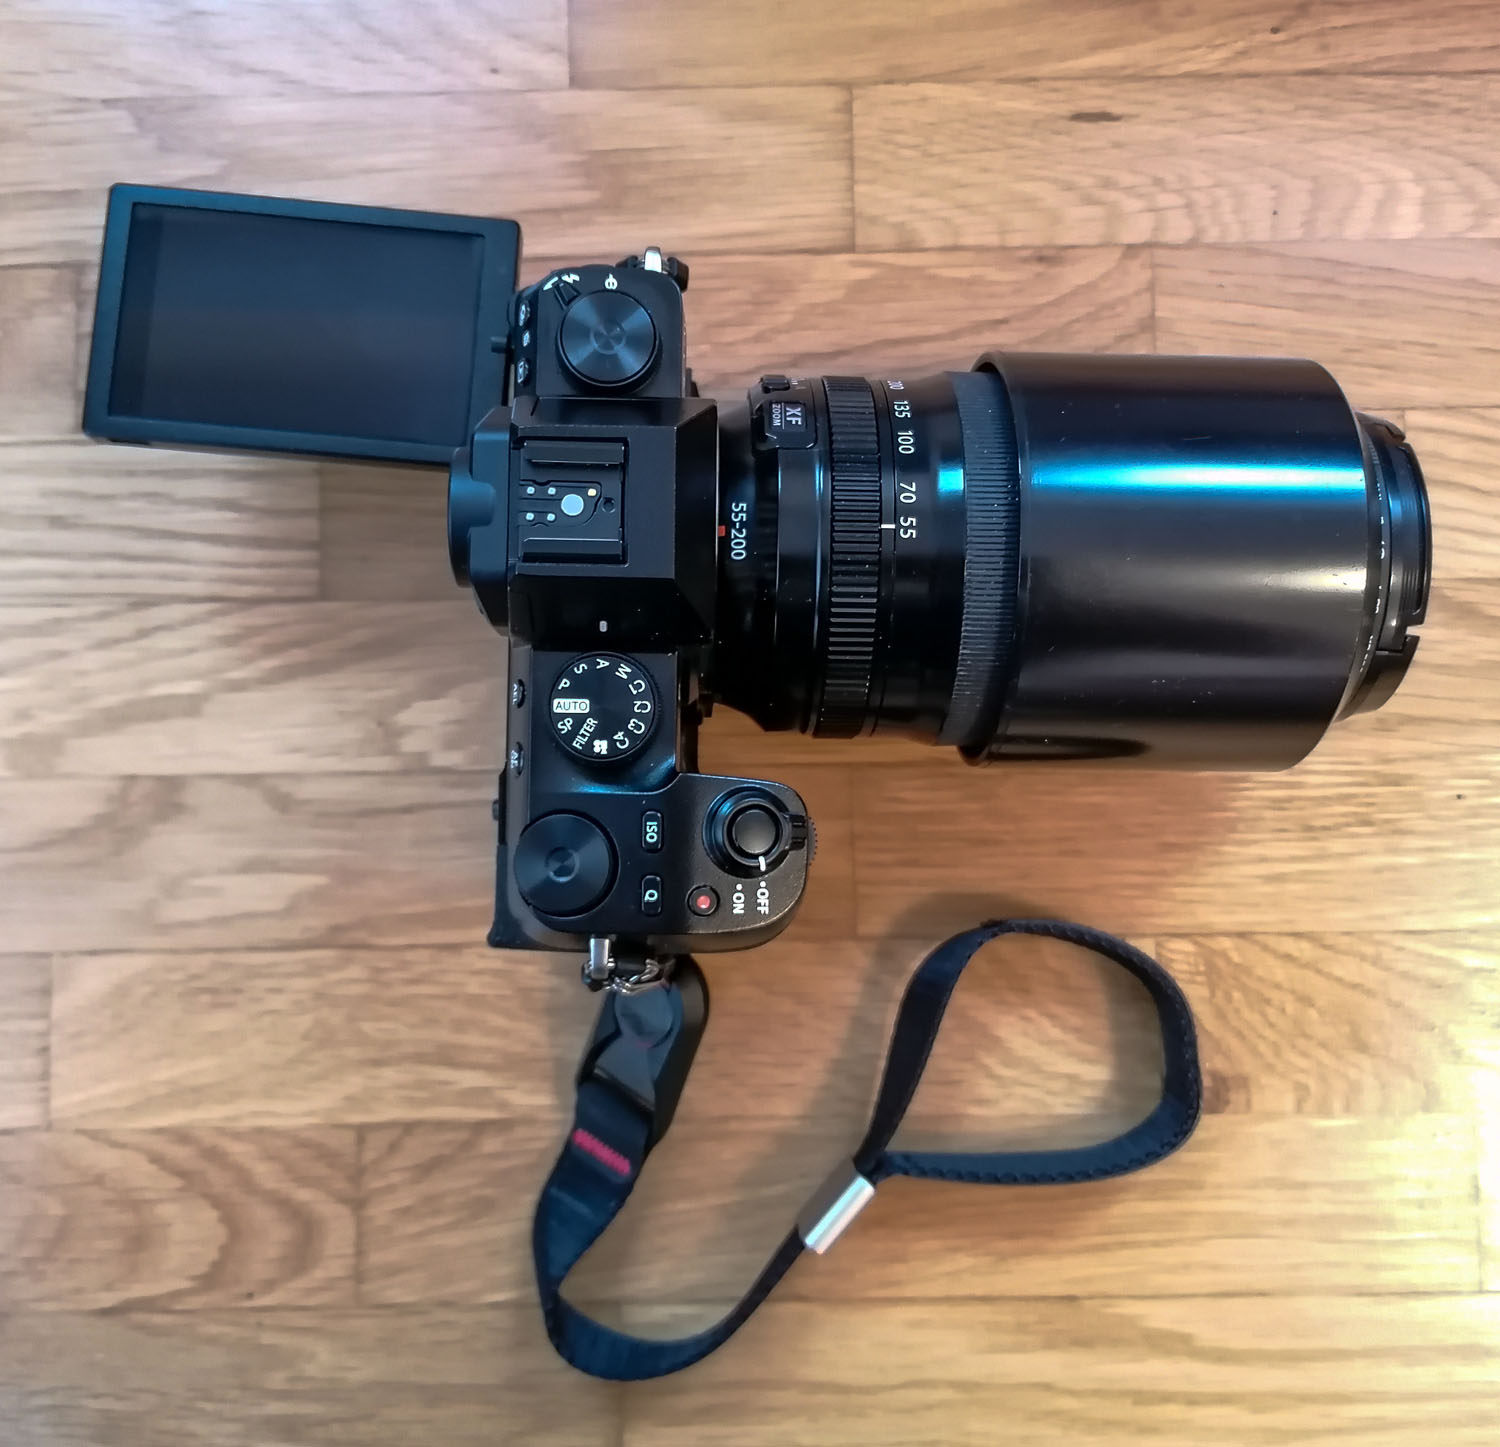 New Camera, New Adventures - My take on the Fuji X-S10 - Fuji X